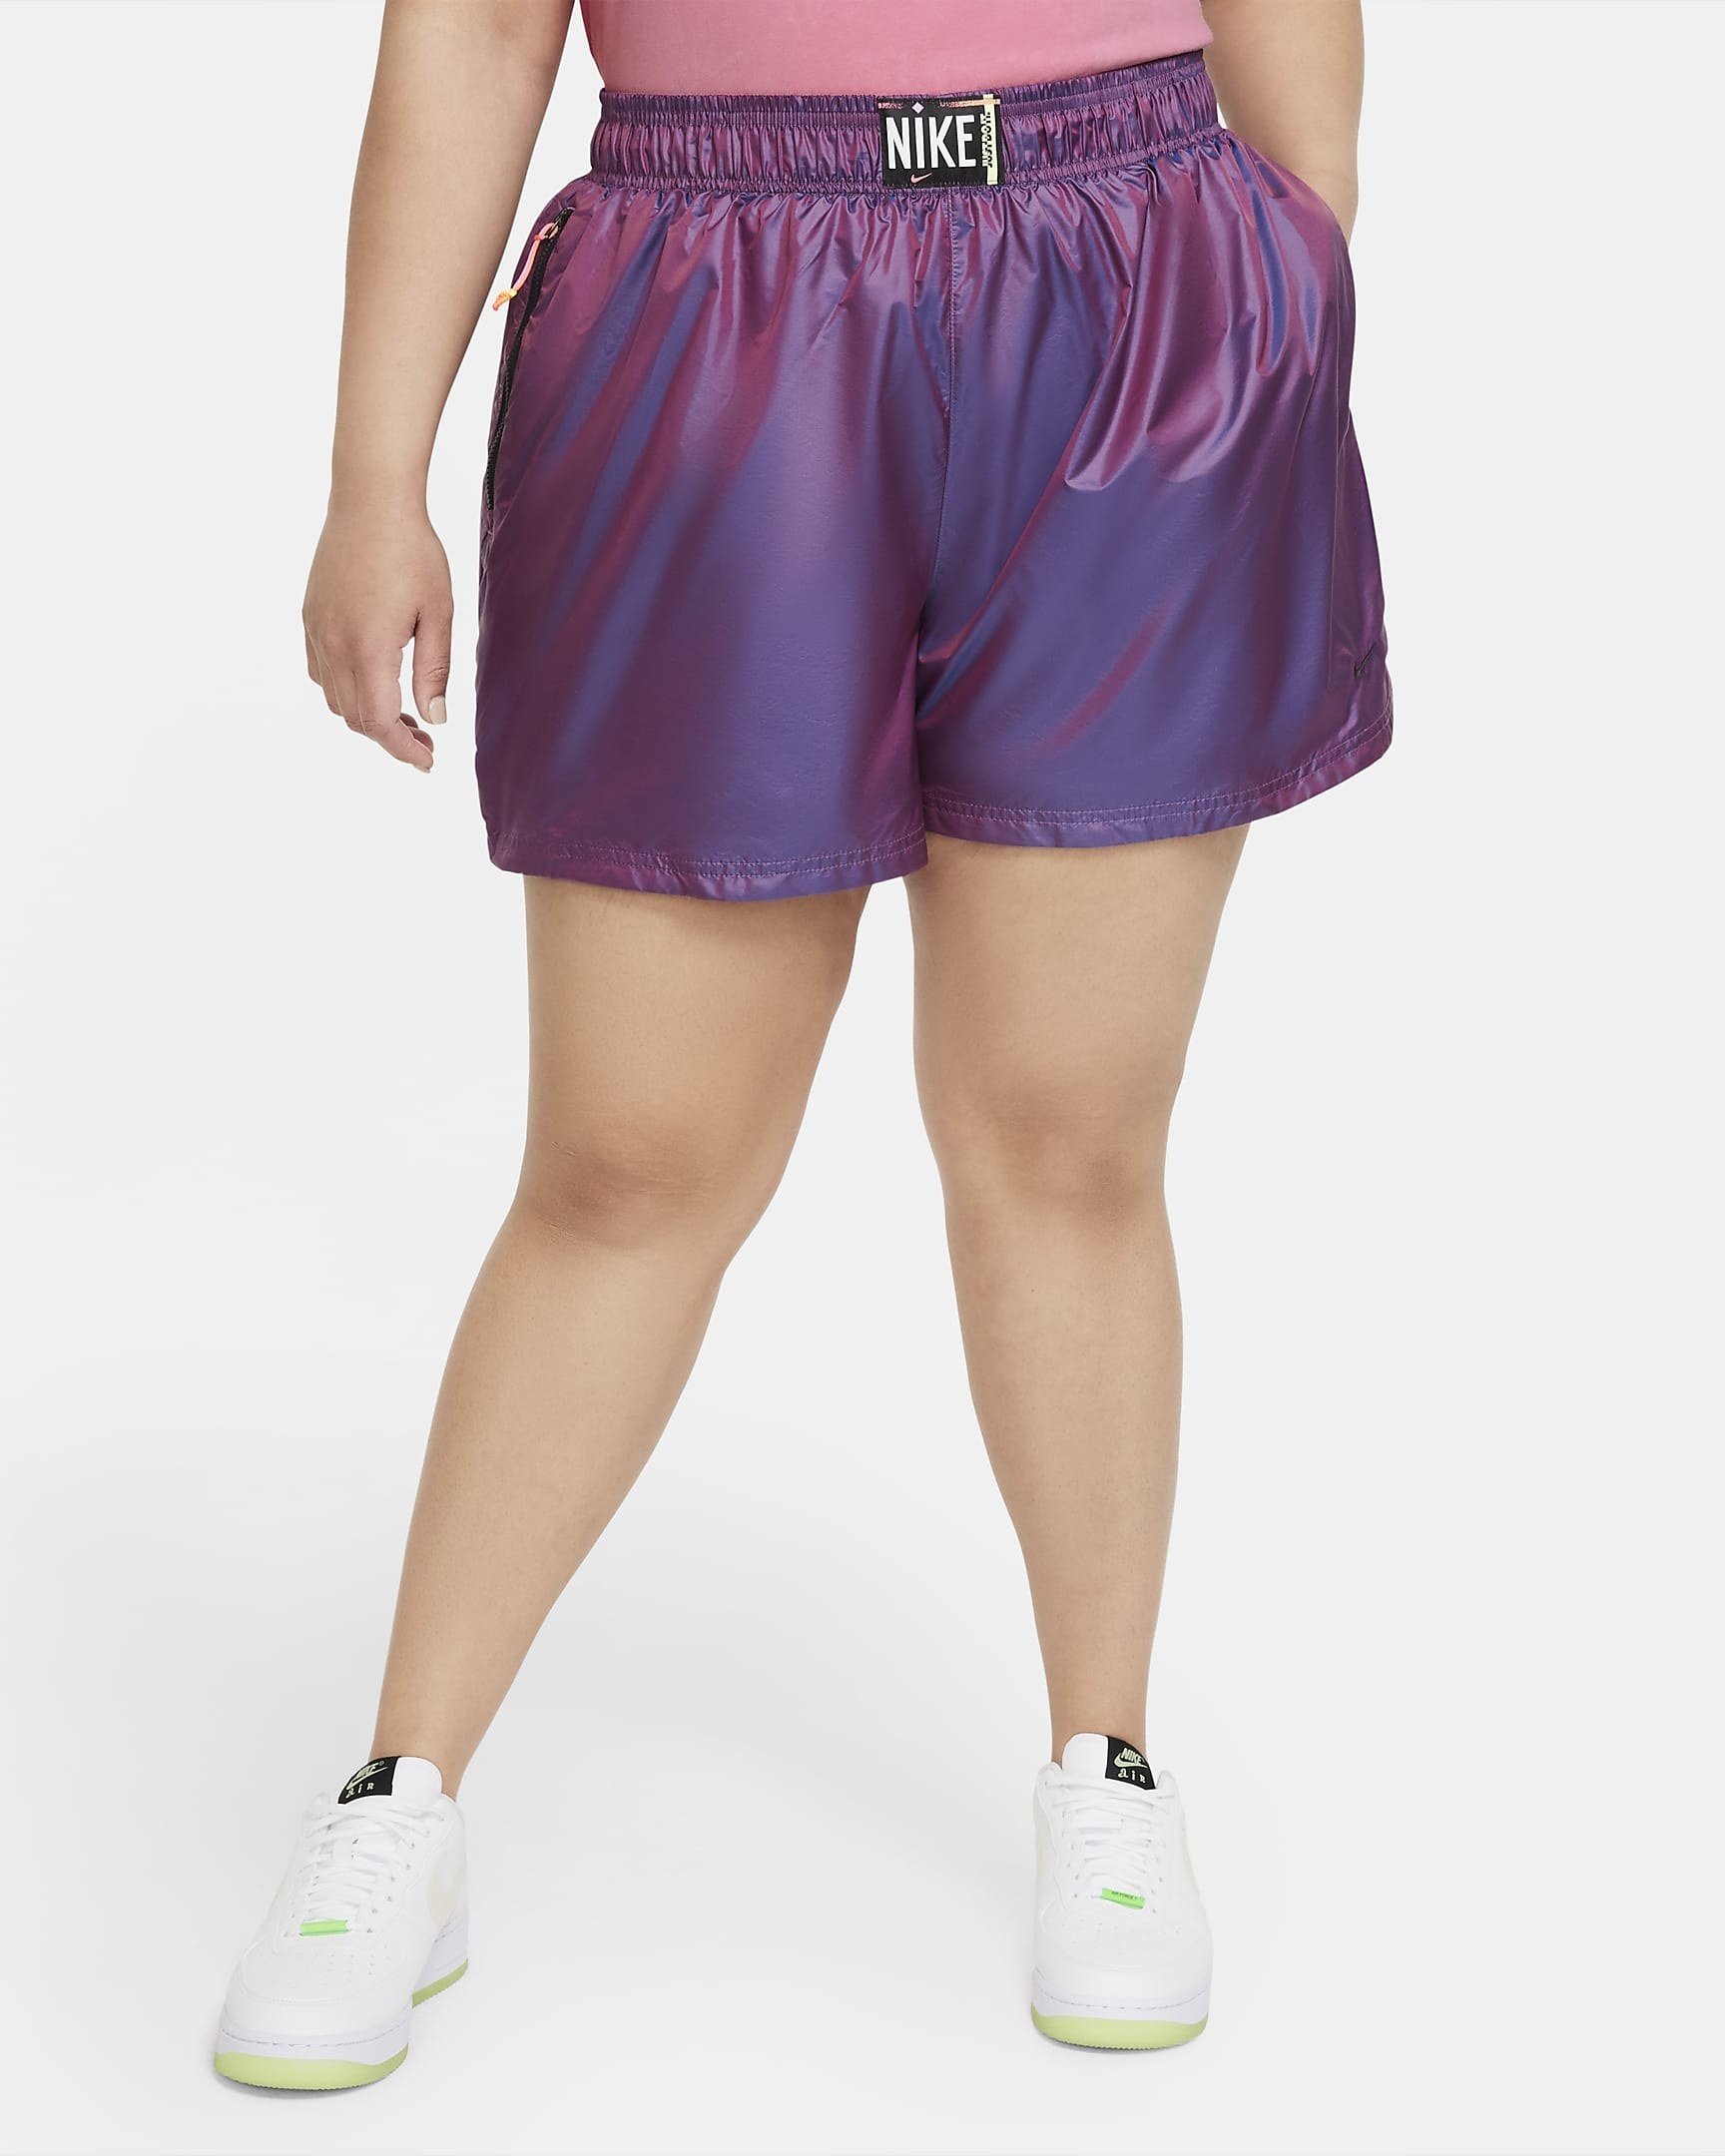 Model wearing purple iridescent shorts